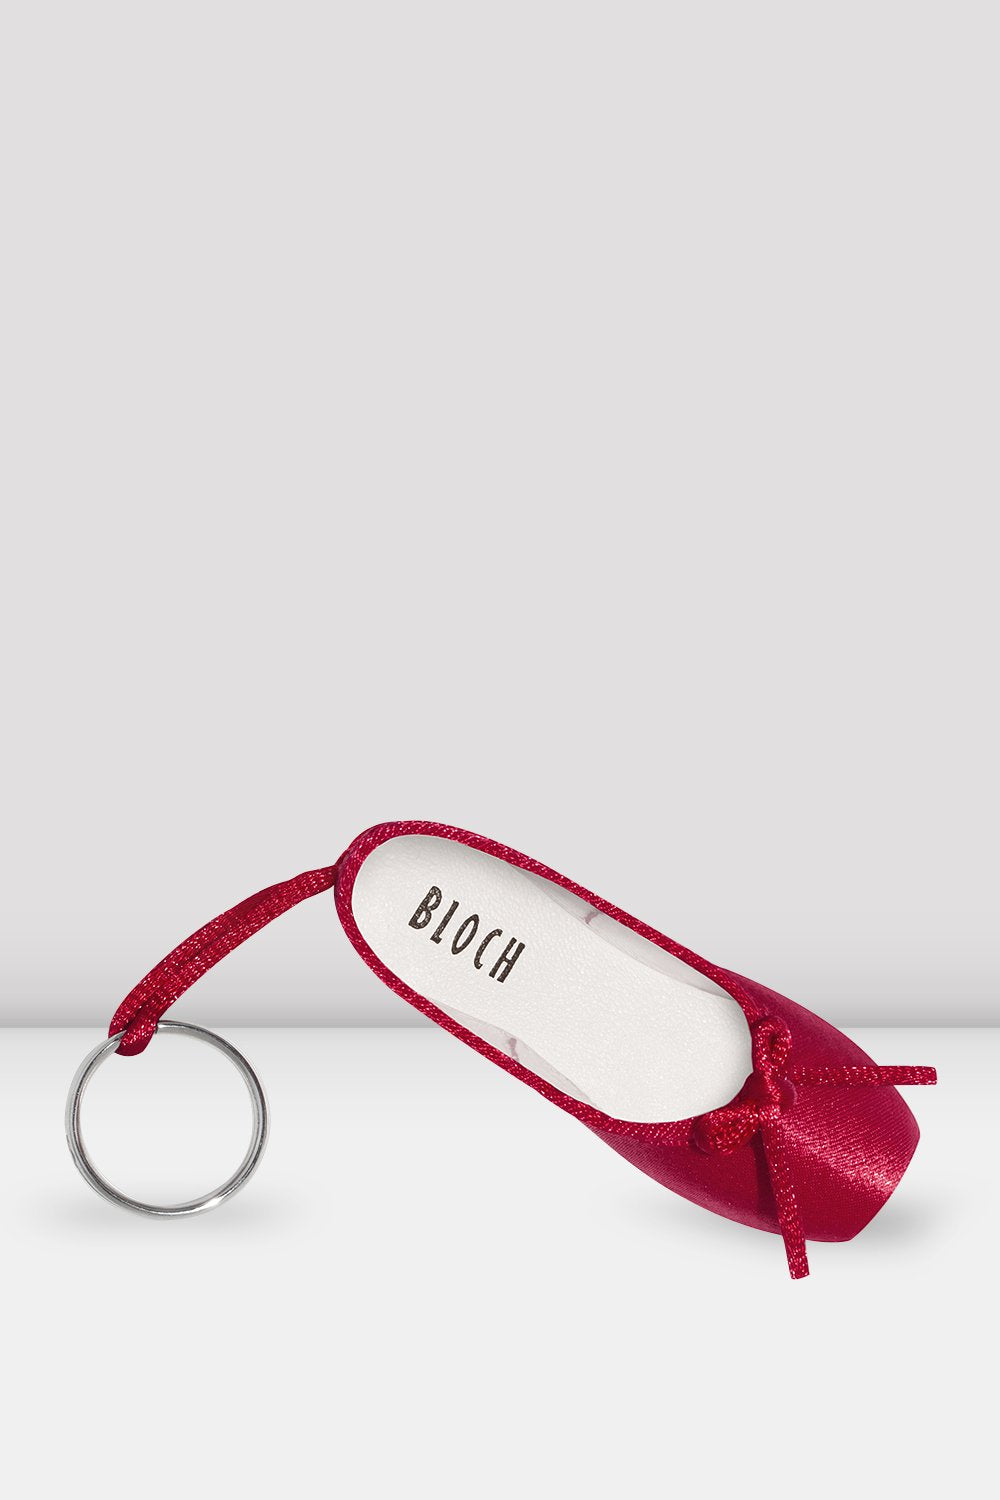 Mini Pointe Shoe Key Chain, Red | BLOCH USA